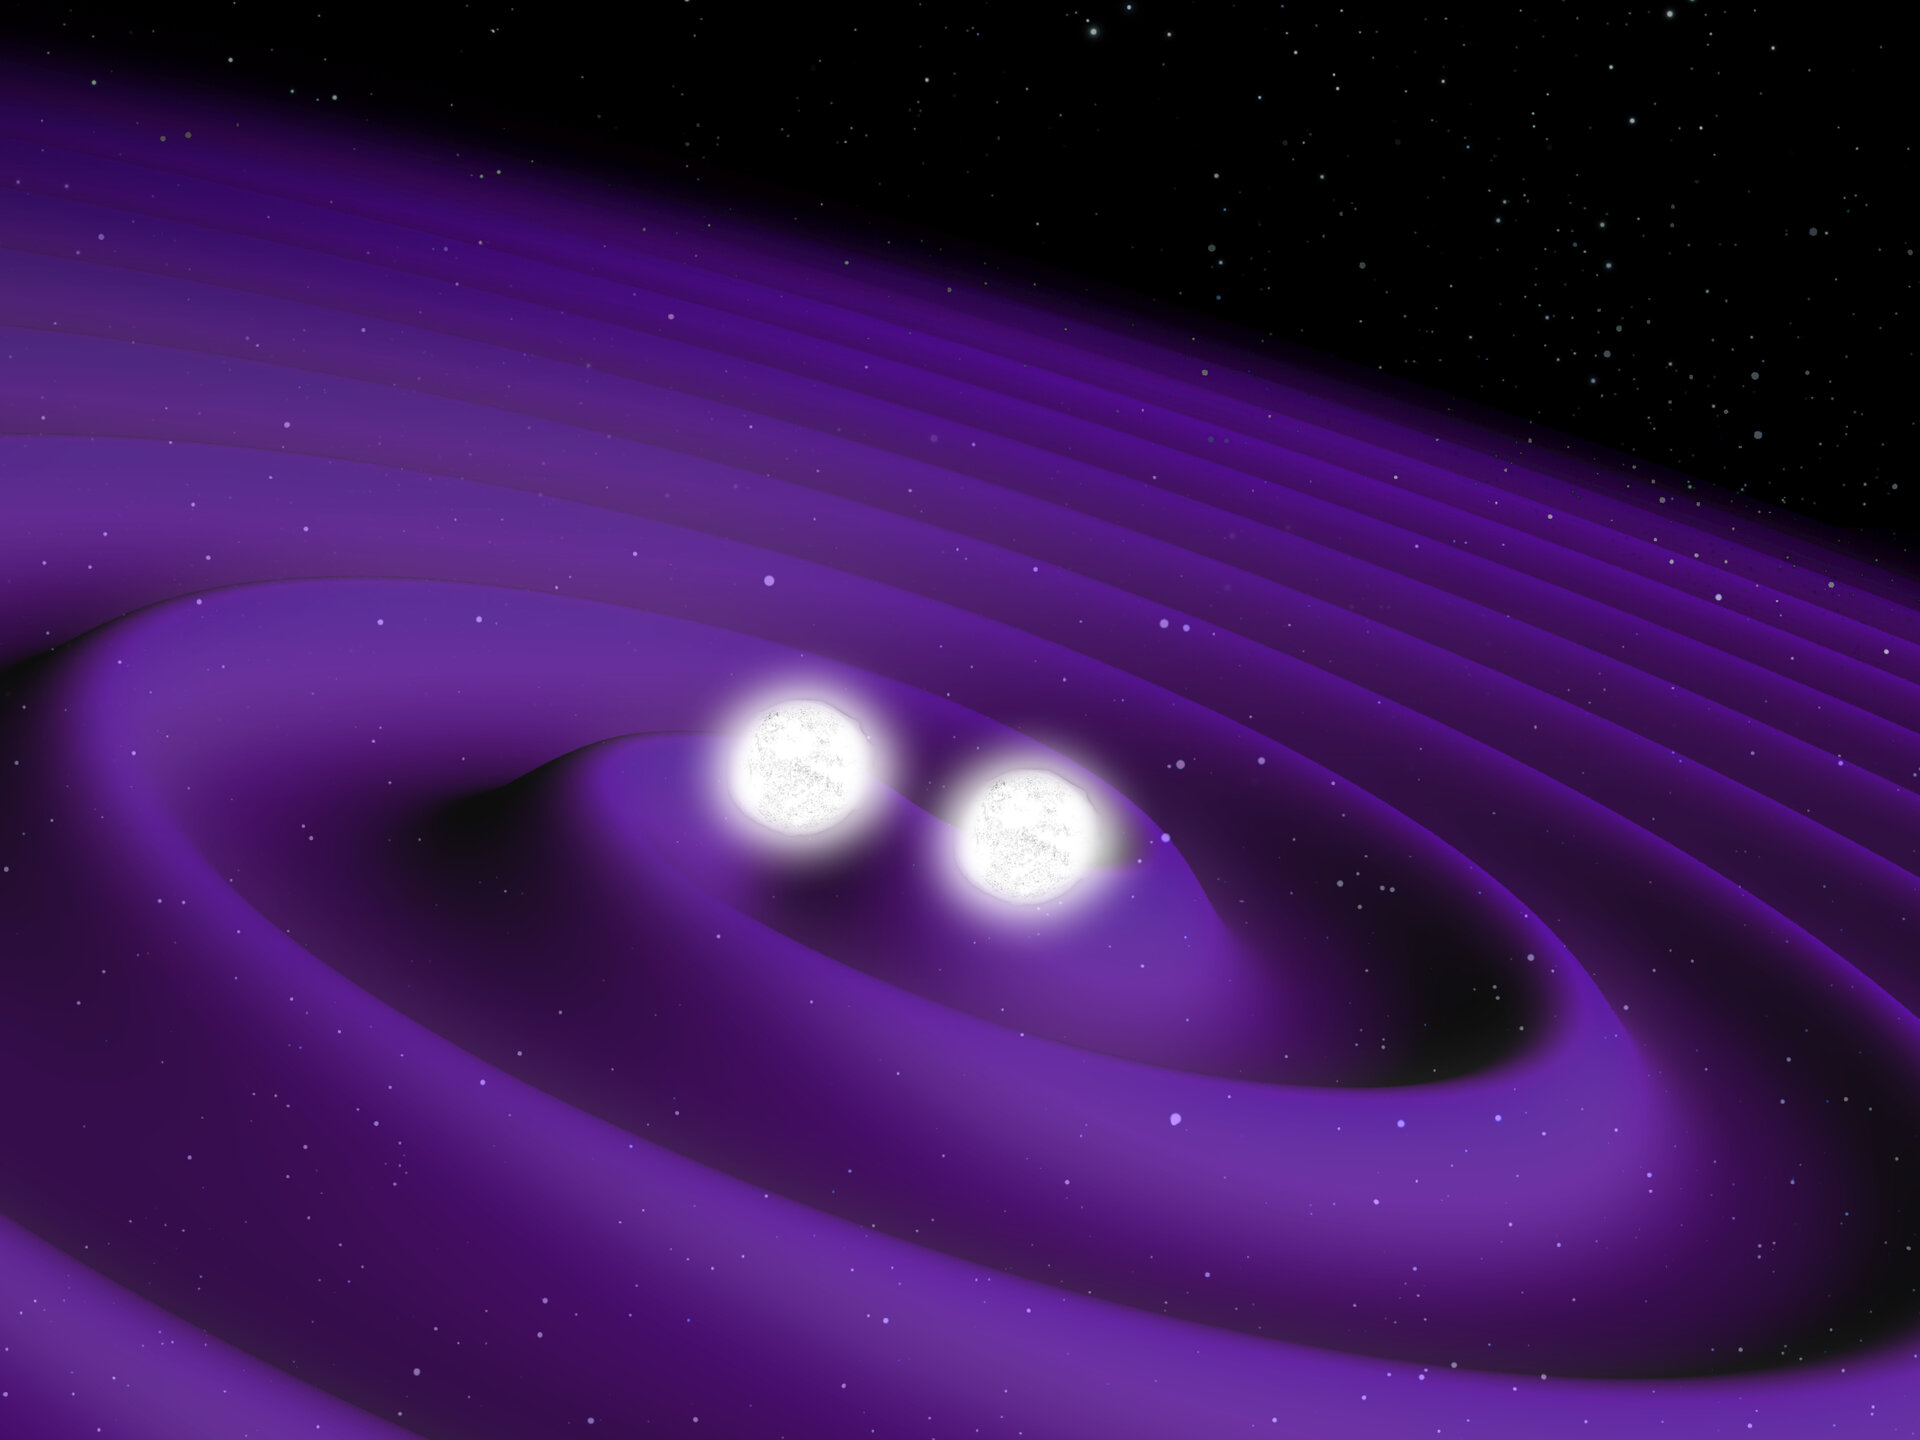 Colliding neutron stars